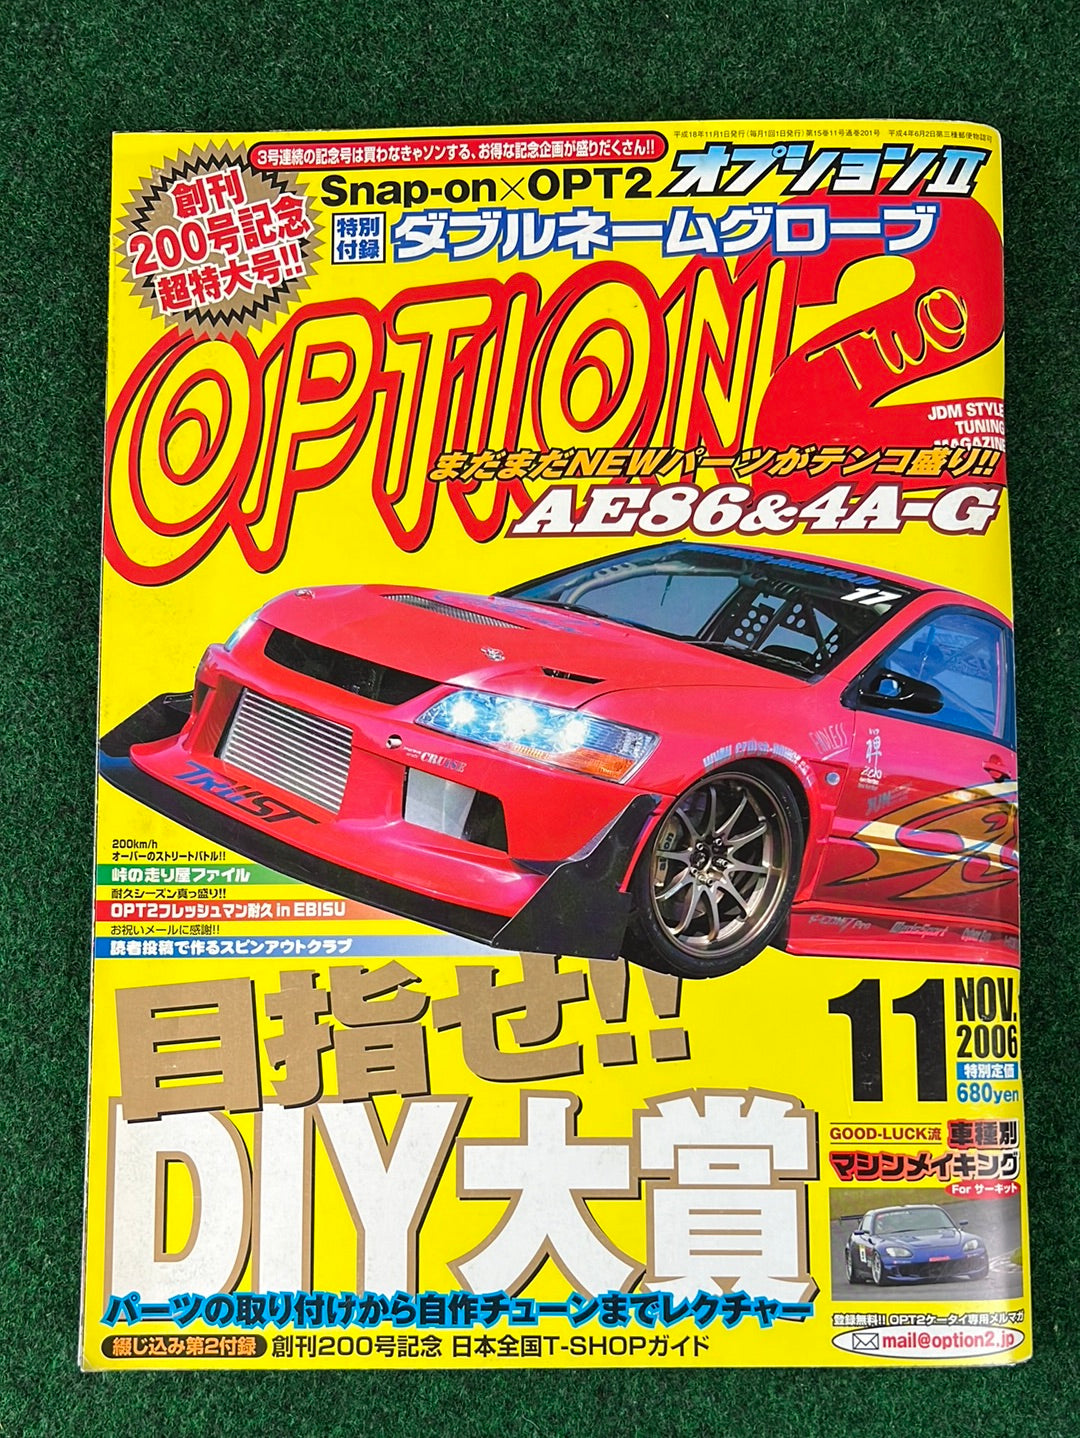 Option2 Magazine - November 2006